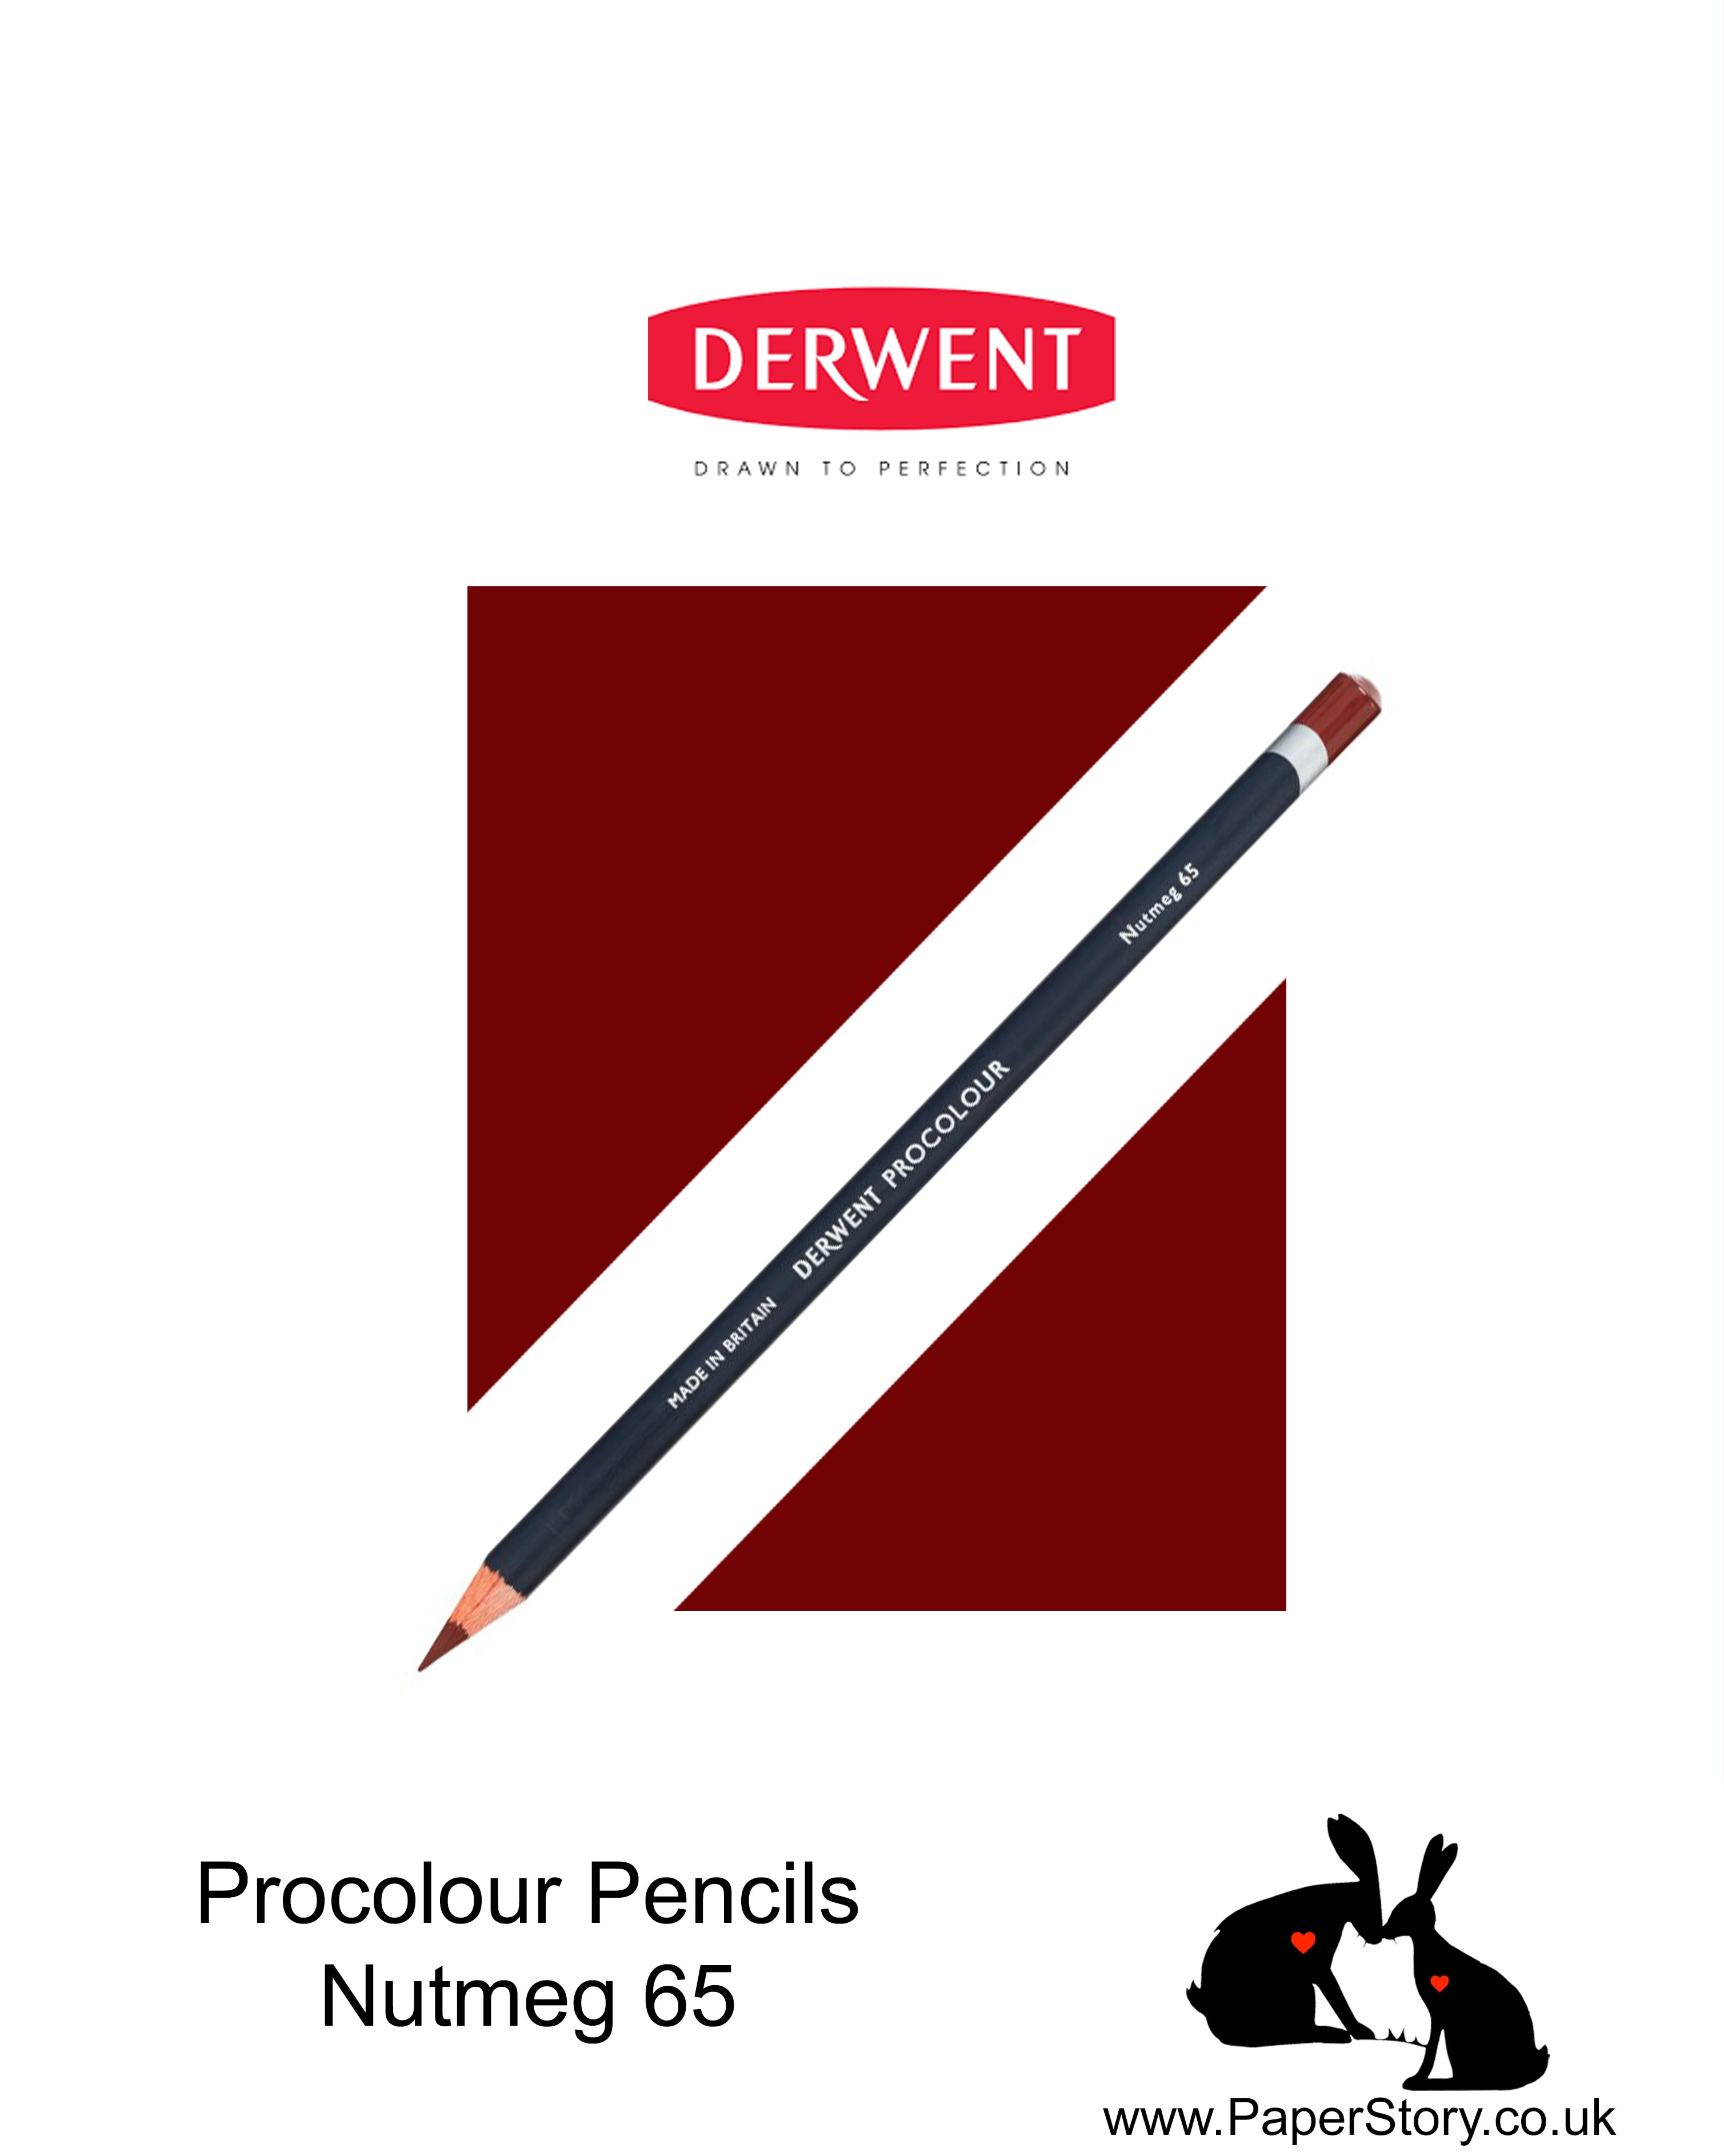 Derwent Procolour pencil Nutmeg 65